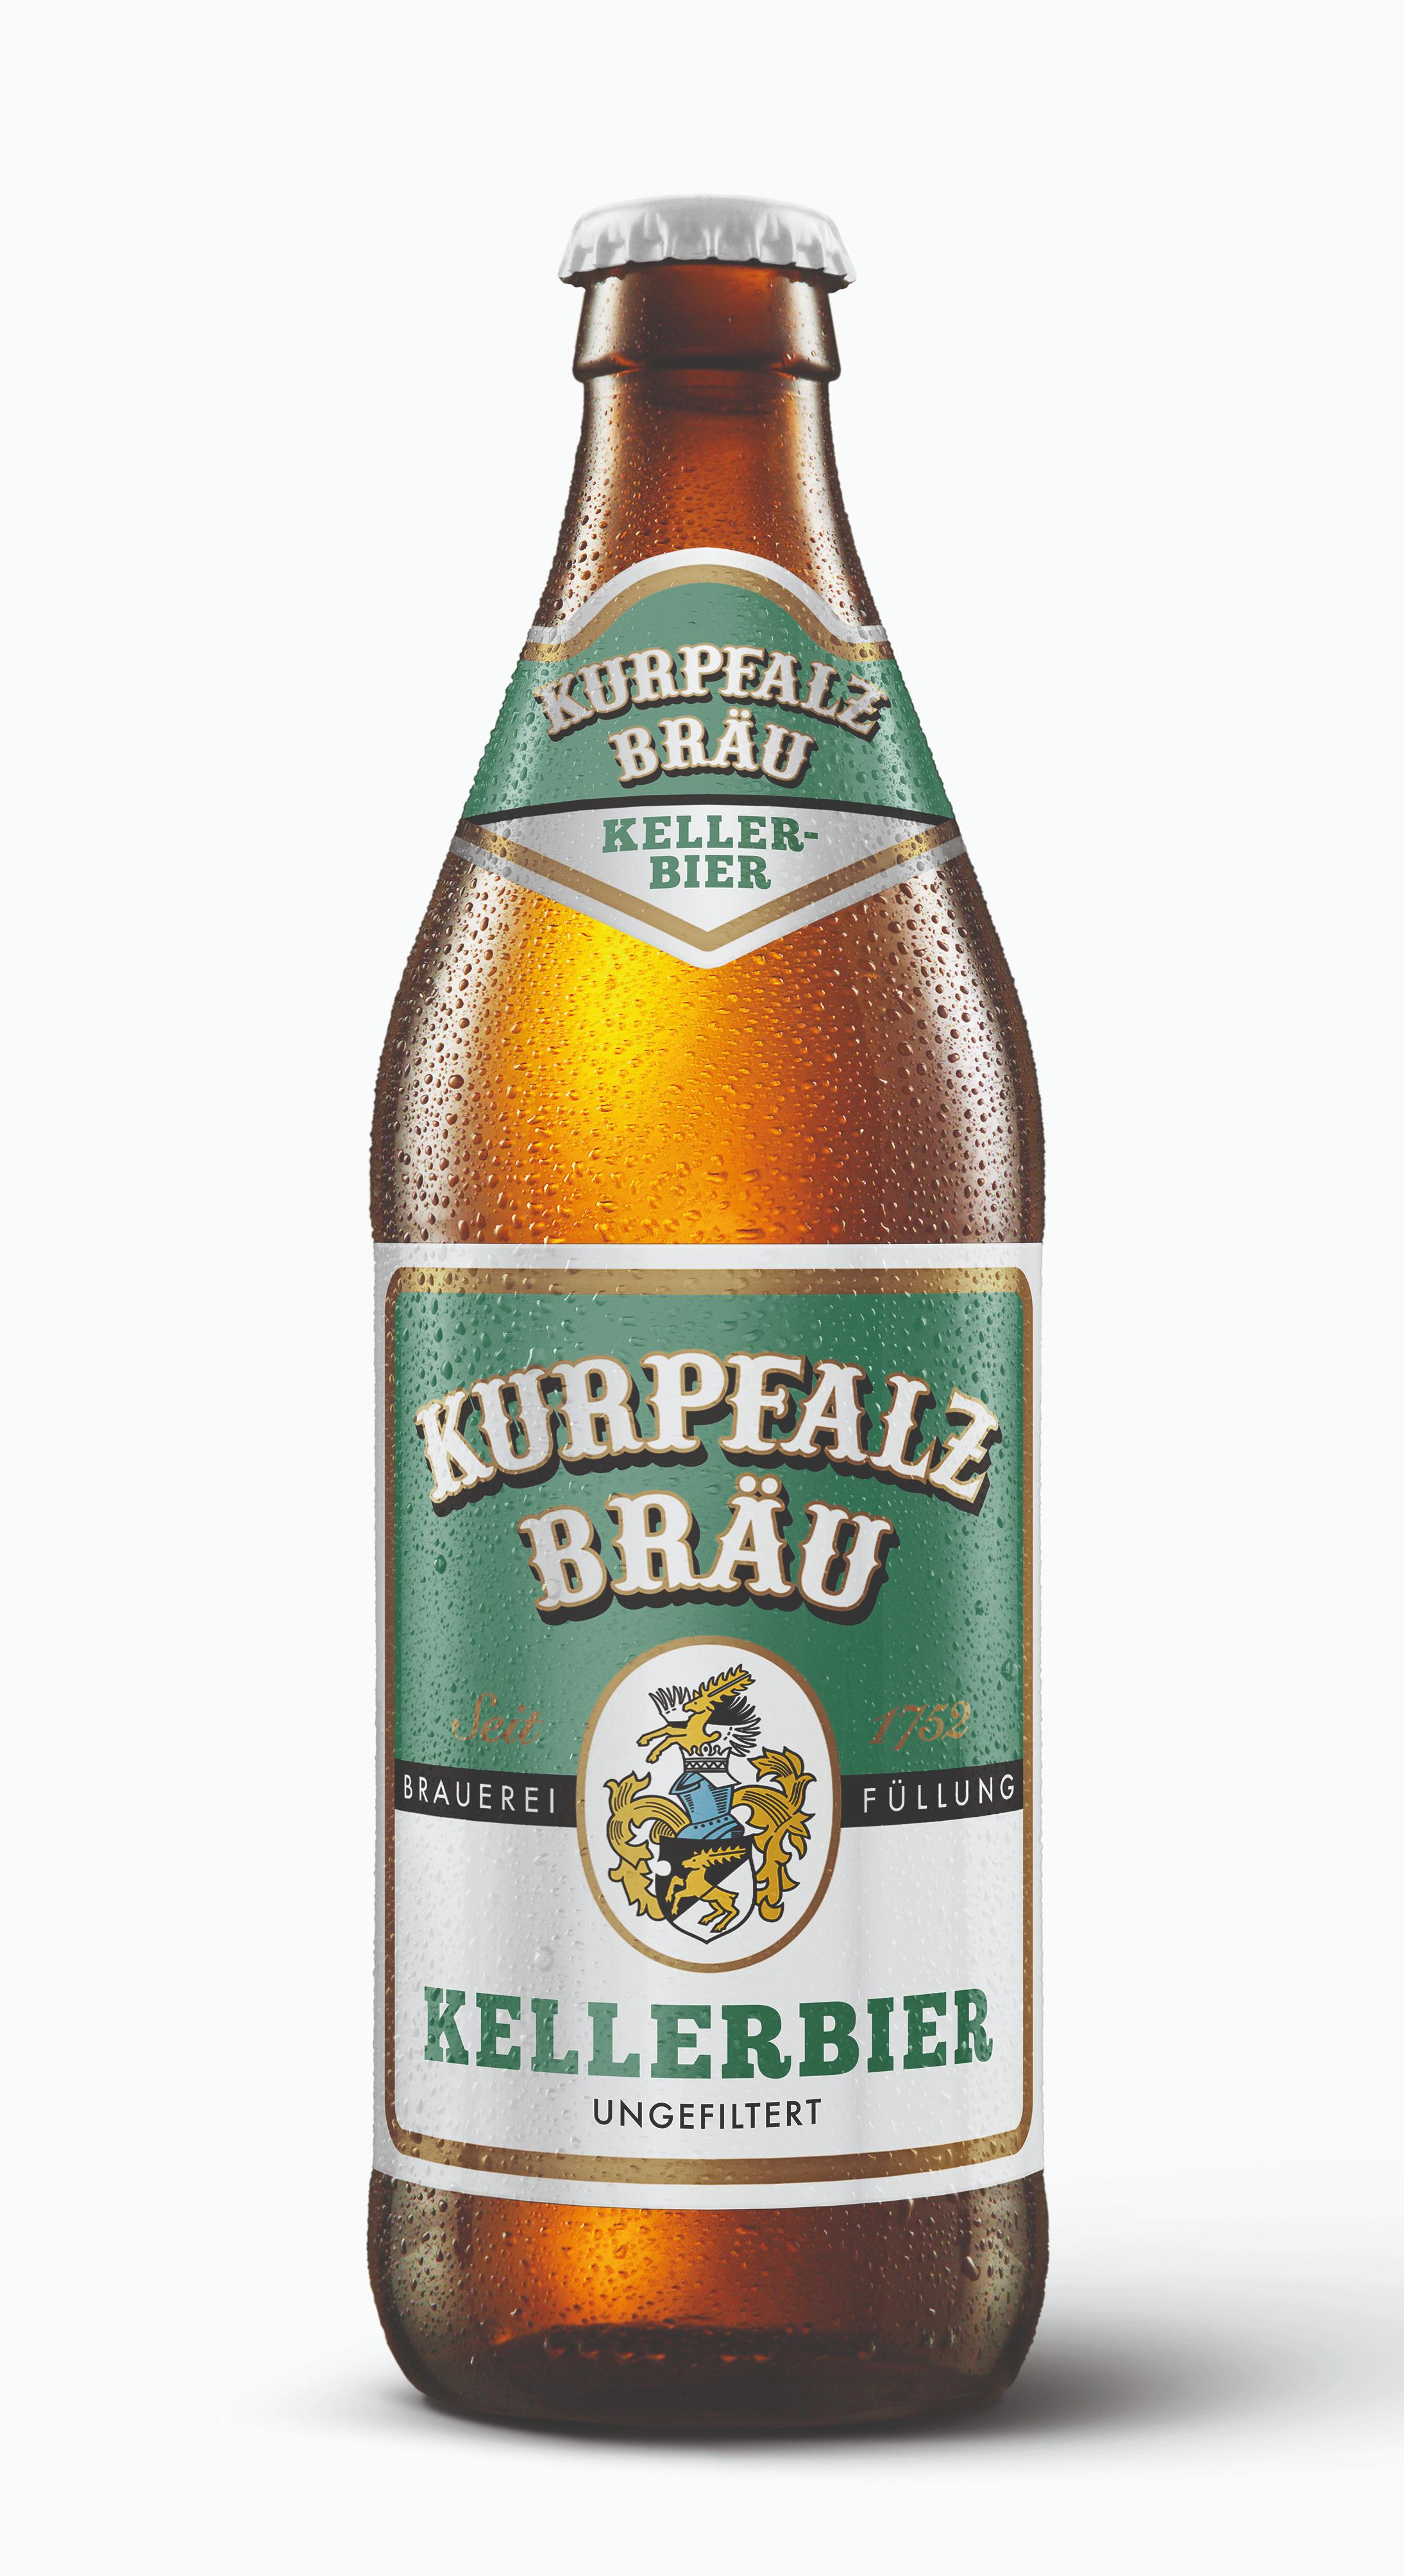 Kurpfalz brau. Курпфальц брой. Kurpfalz Brau Kellerbier пиво свет н ф 4.9. Моосбахер Келлербир пиво. Курпфальц Урвайцен.